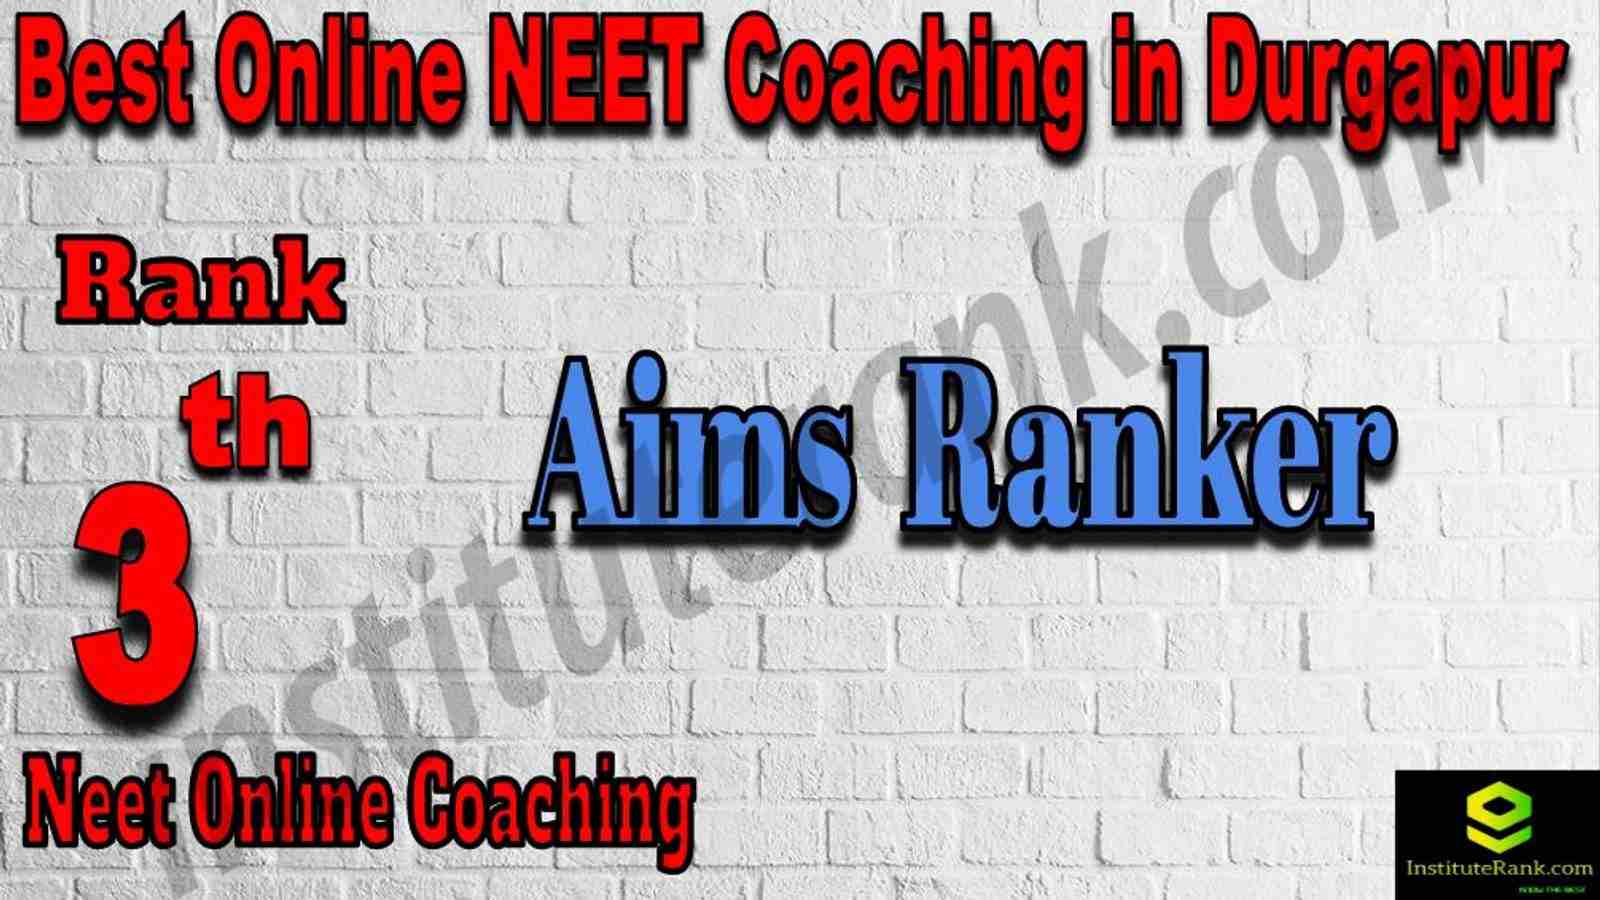 3rd Best Online Neet Coaching in Durgapur